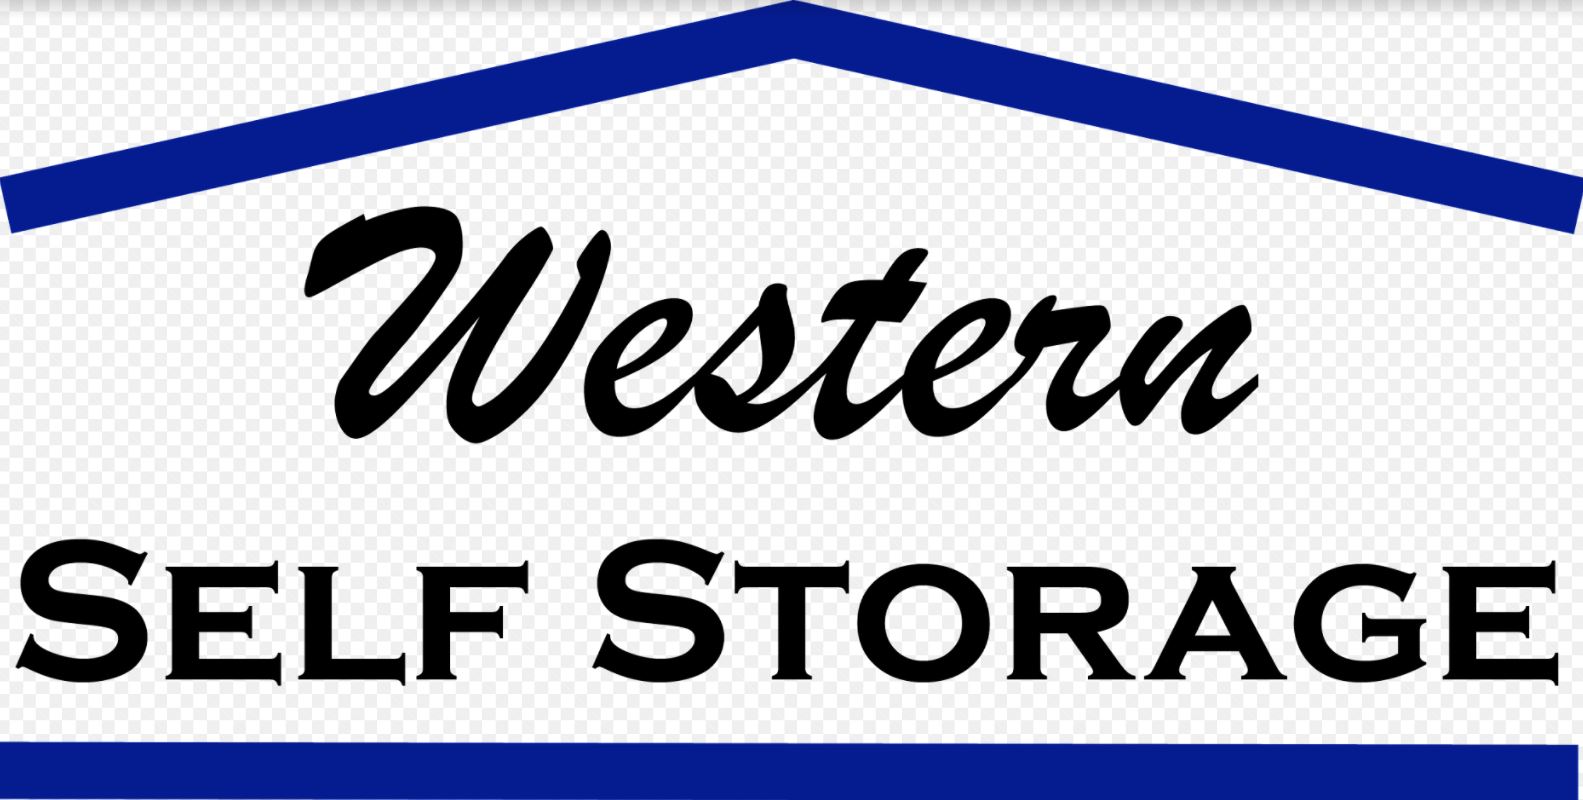 Western self storage